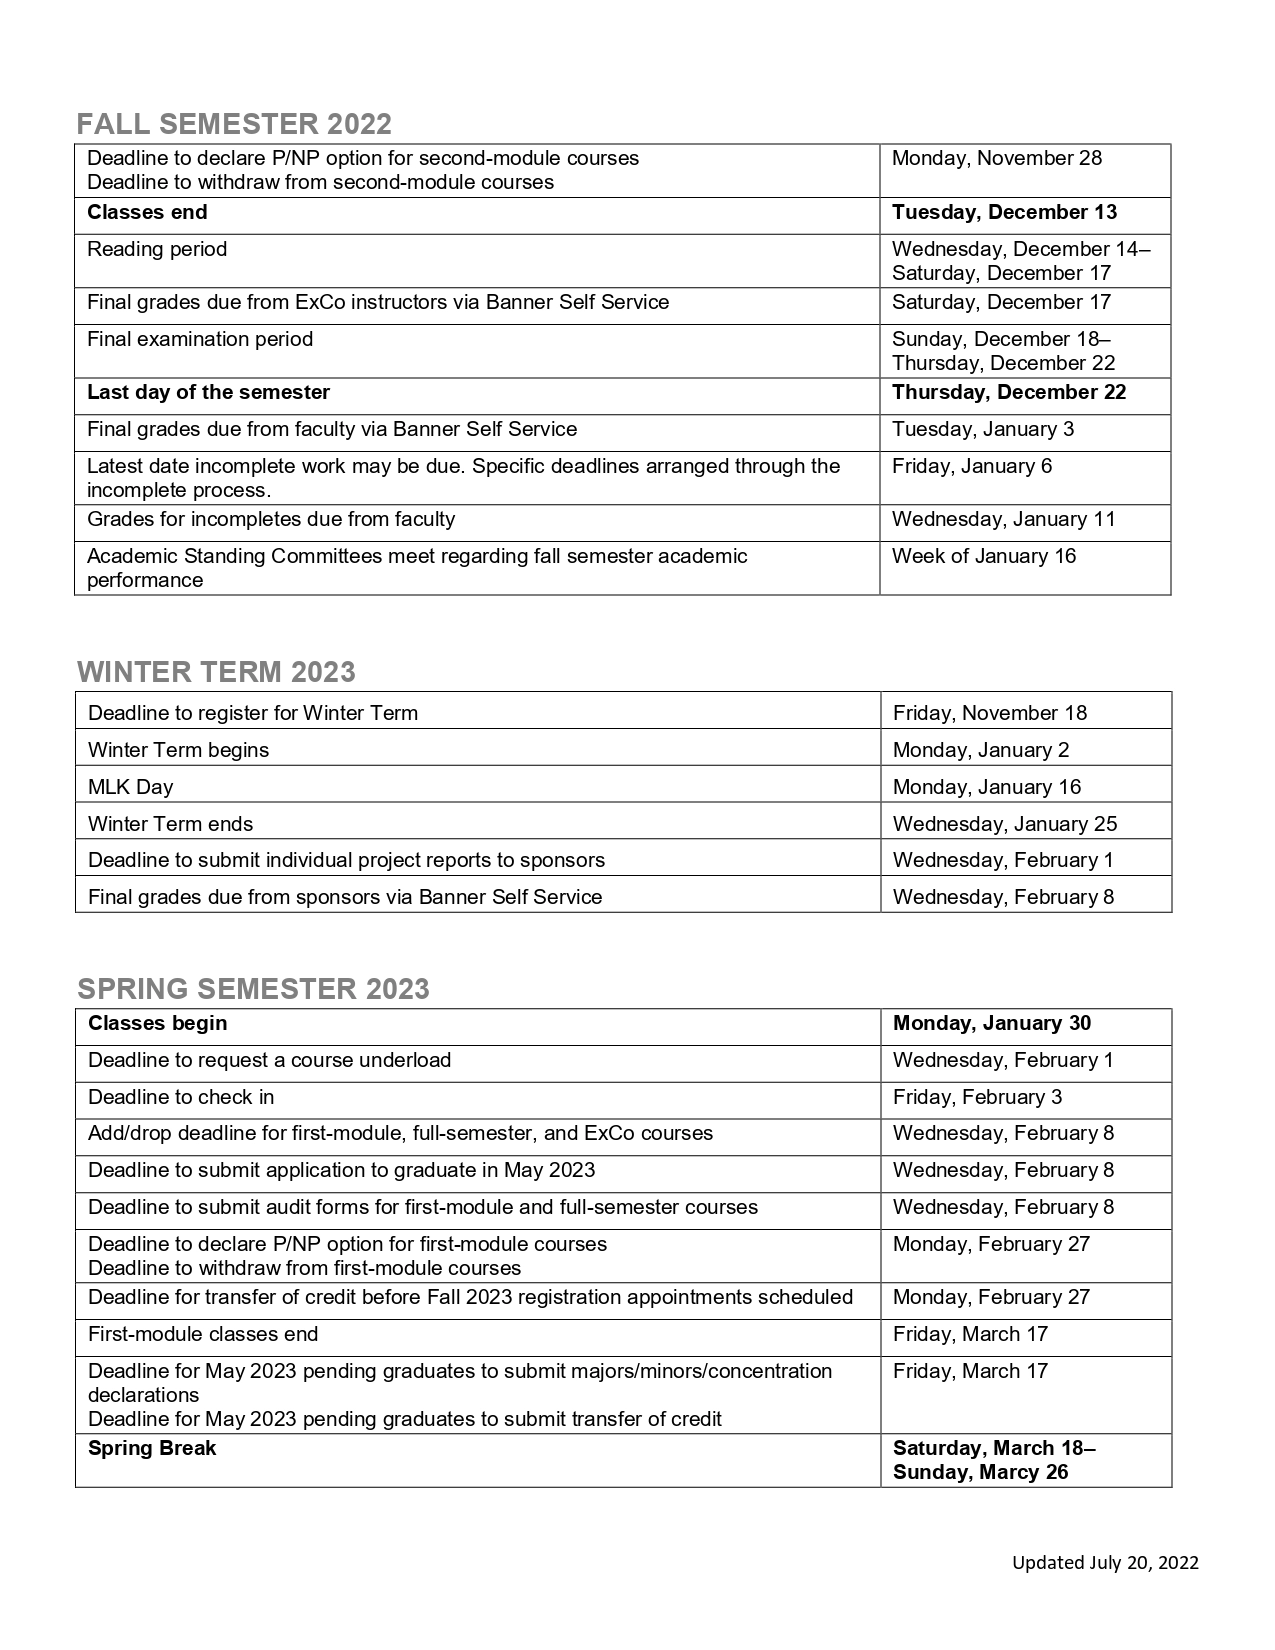 oberlin-academic-calendar-2021-22-updated-oberlin-college-academic-calendar-edusphere-insights